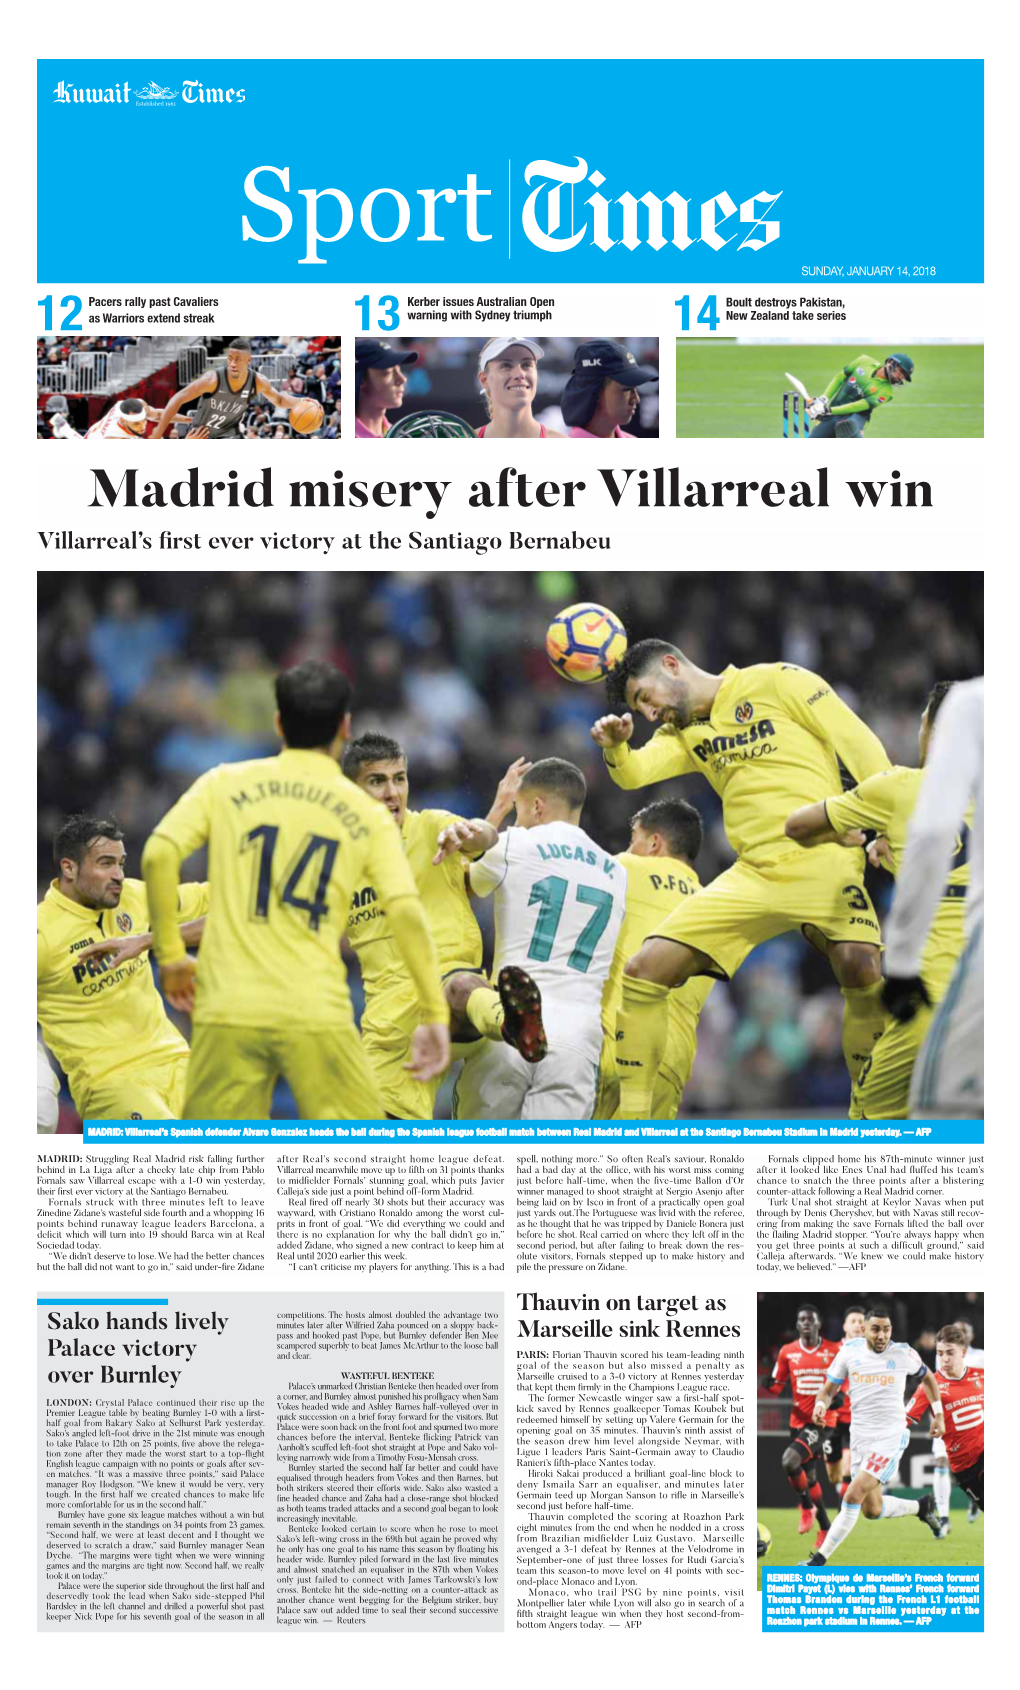 Madrid Misery After Villarreal Win